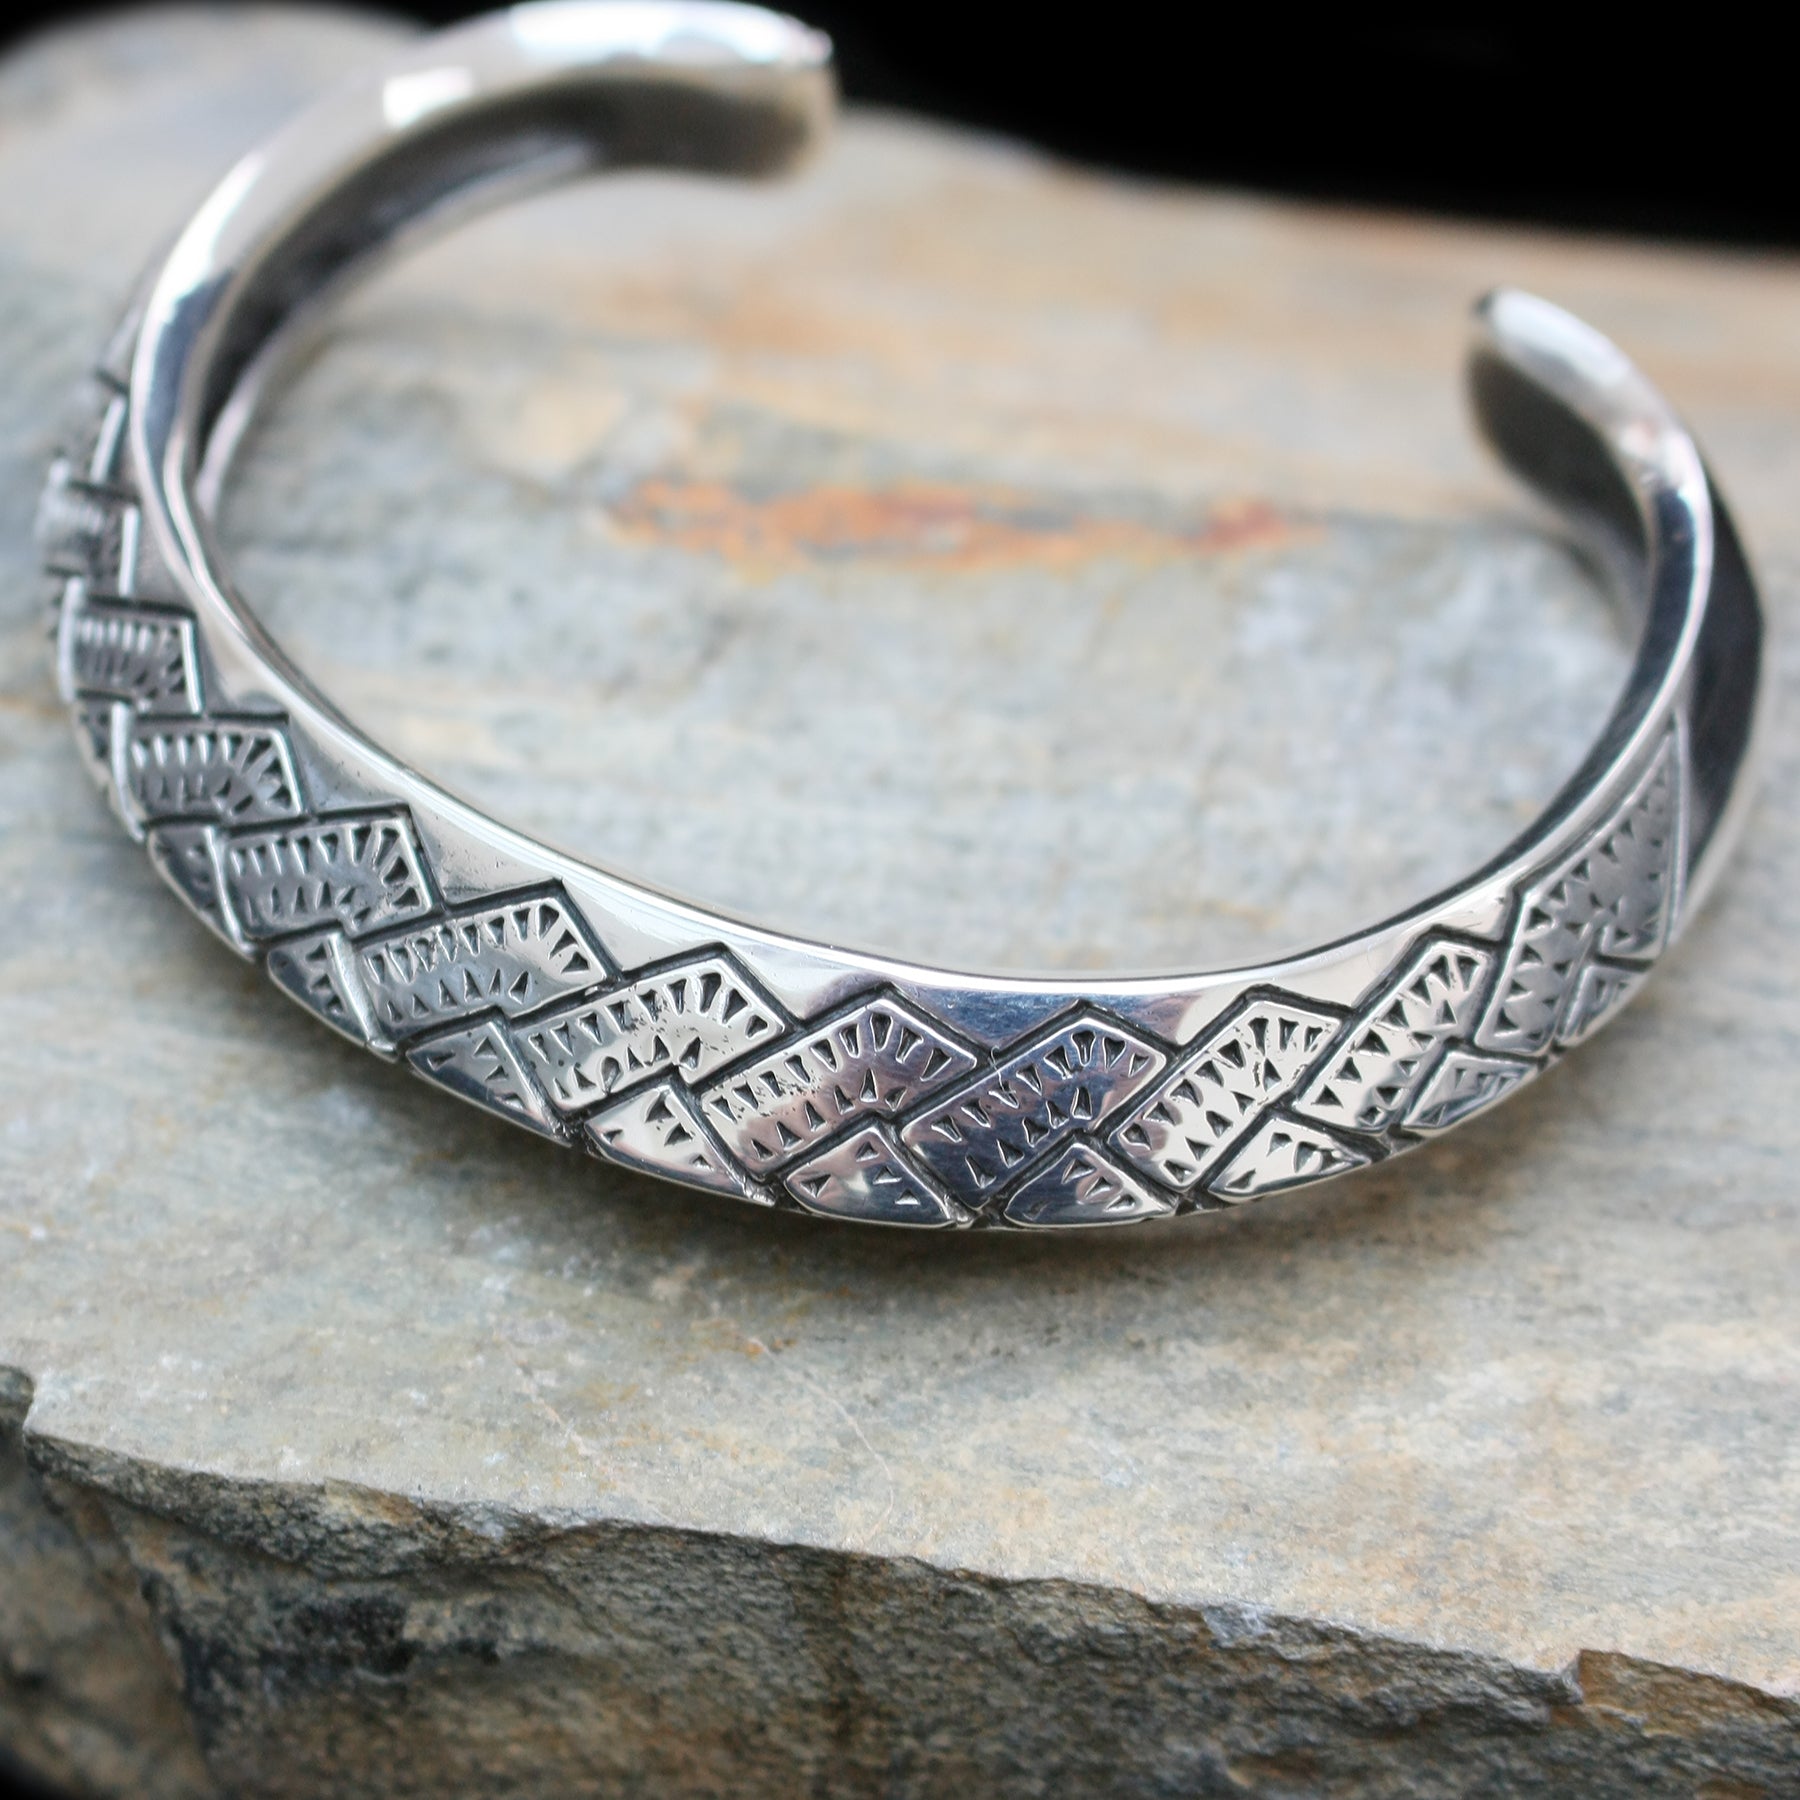 Silver Viking Axe Arm Ring on Rock - Viking Bracelets